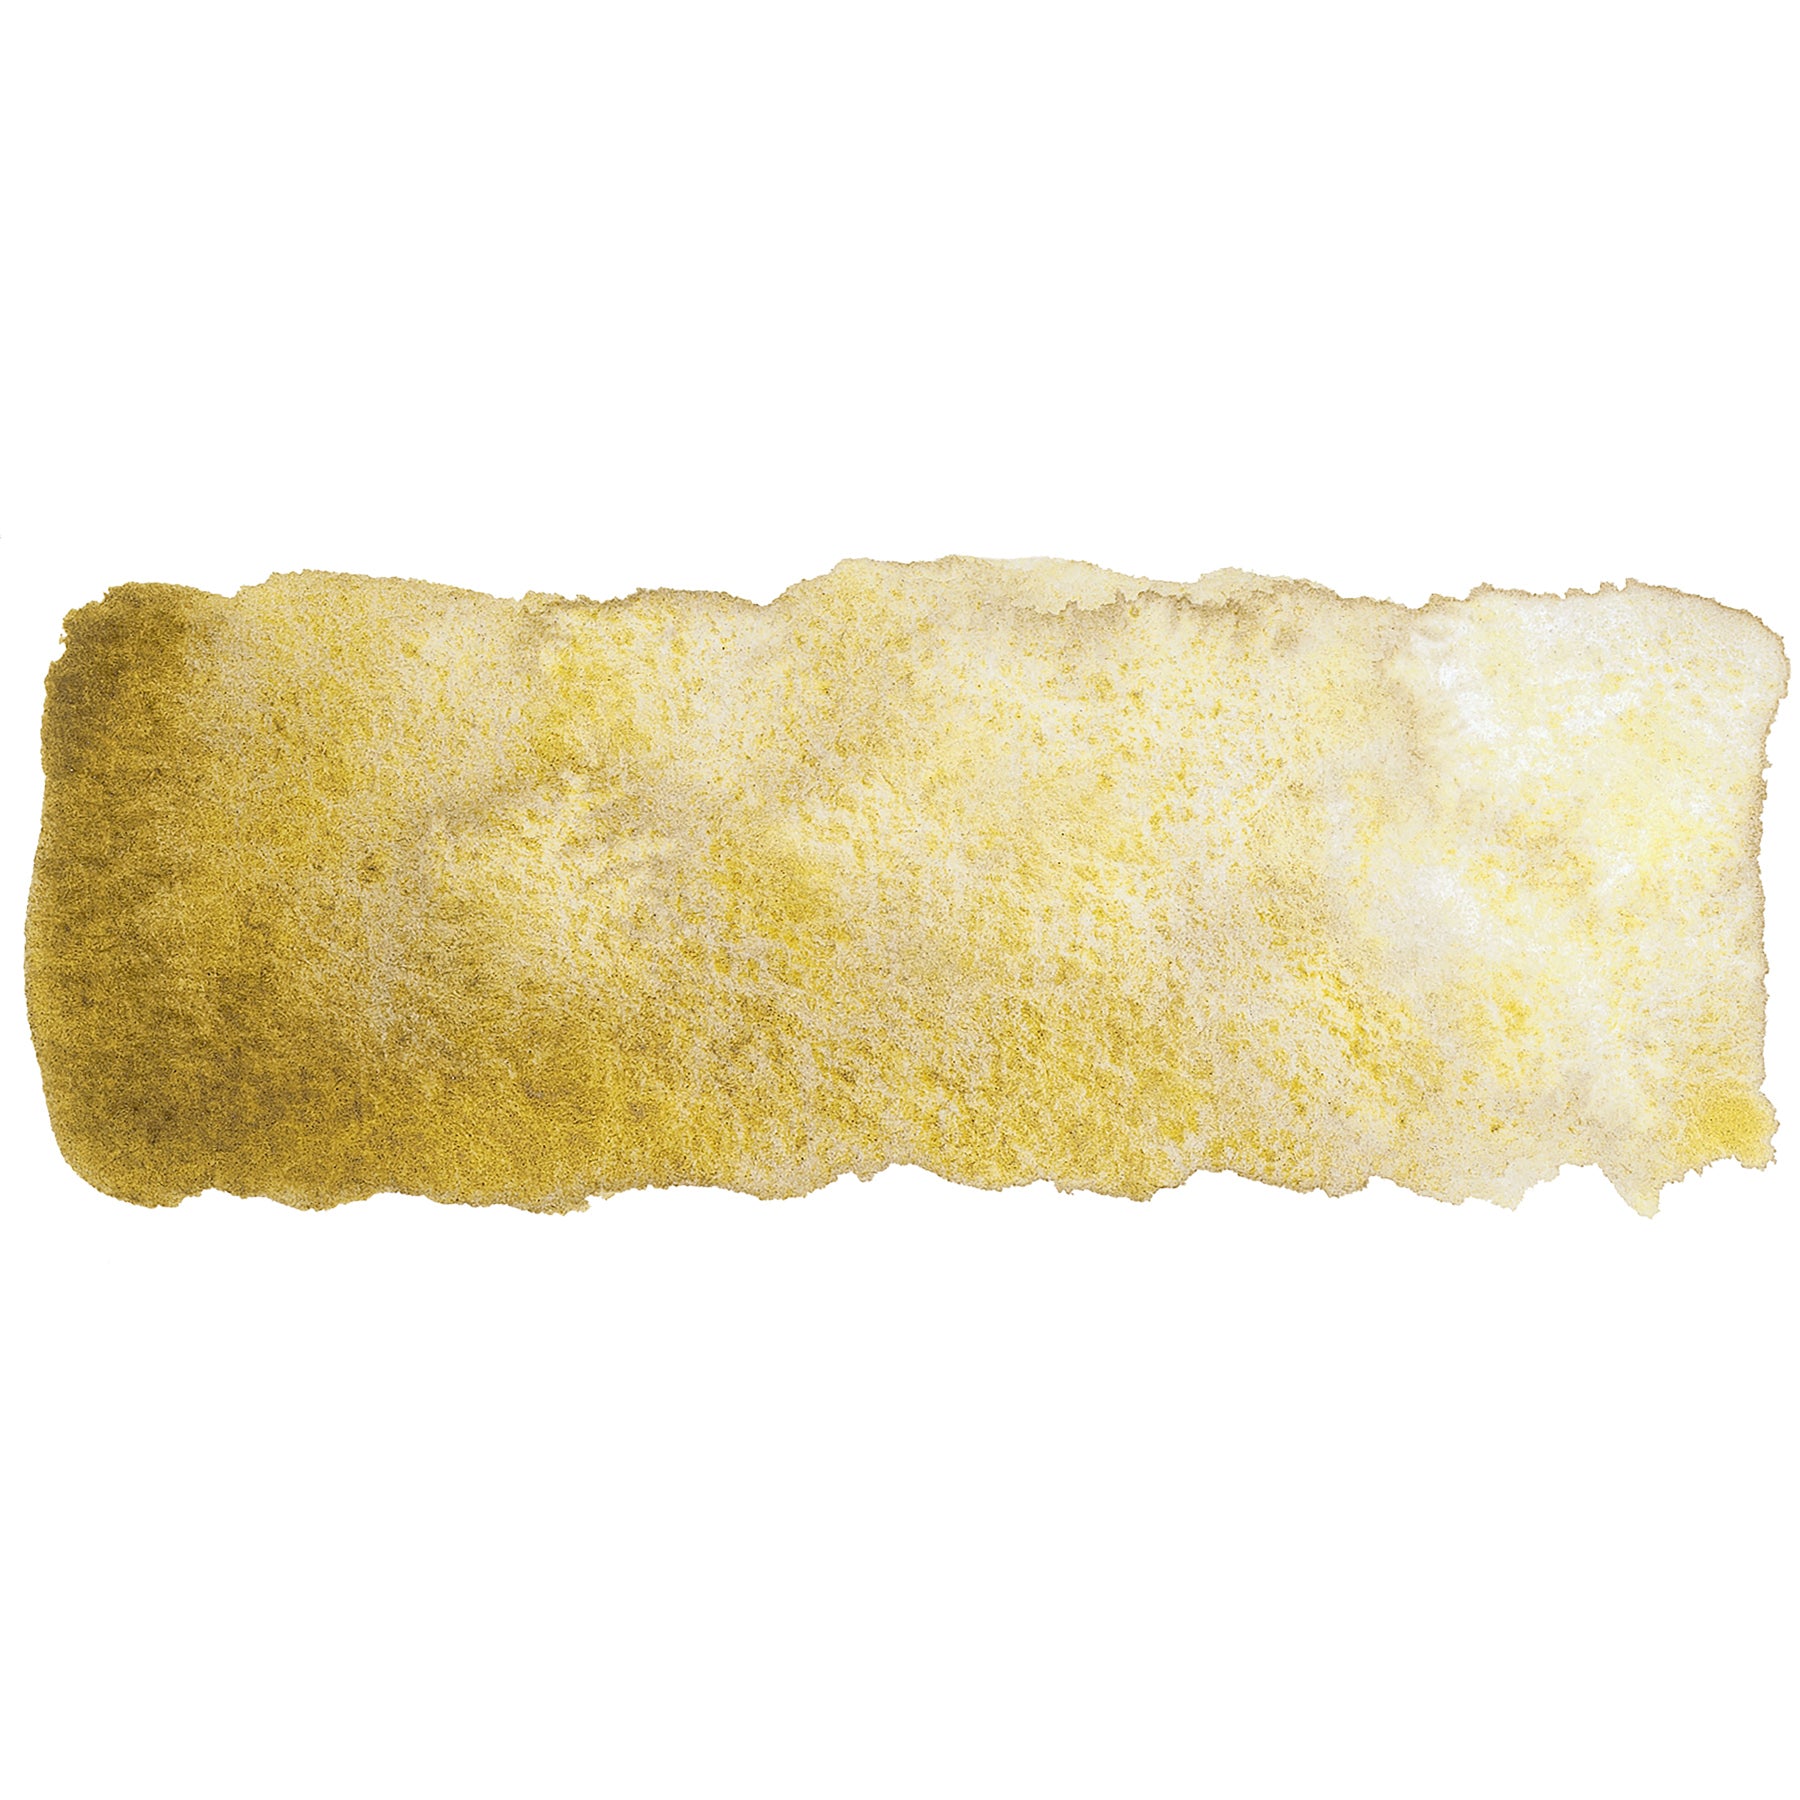 Schmincke Horadam® Super granulating Half pan 921 Desert yellow 3